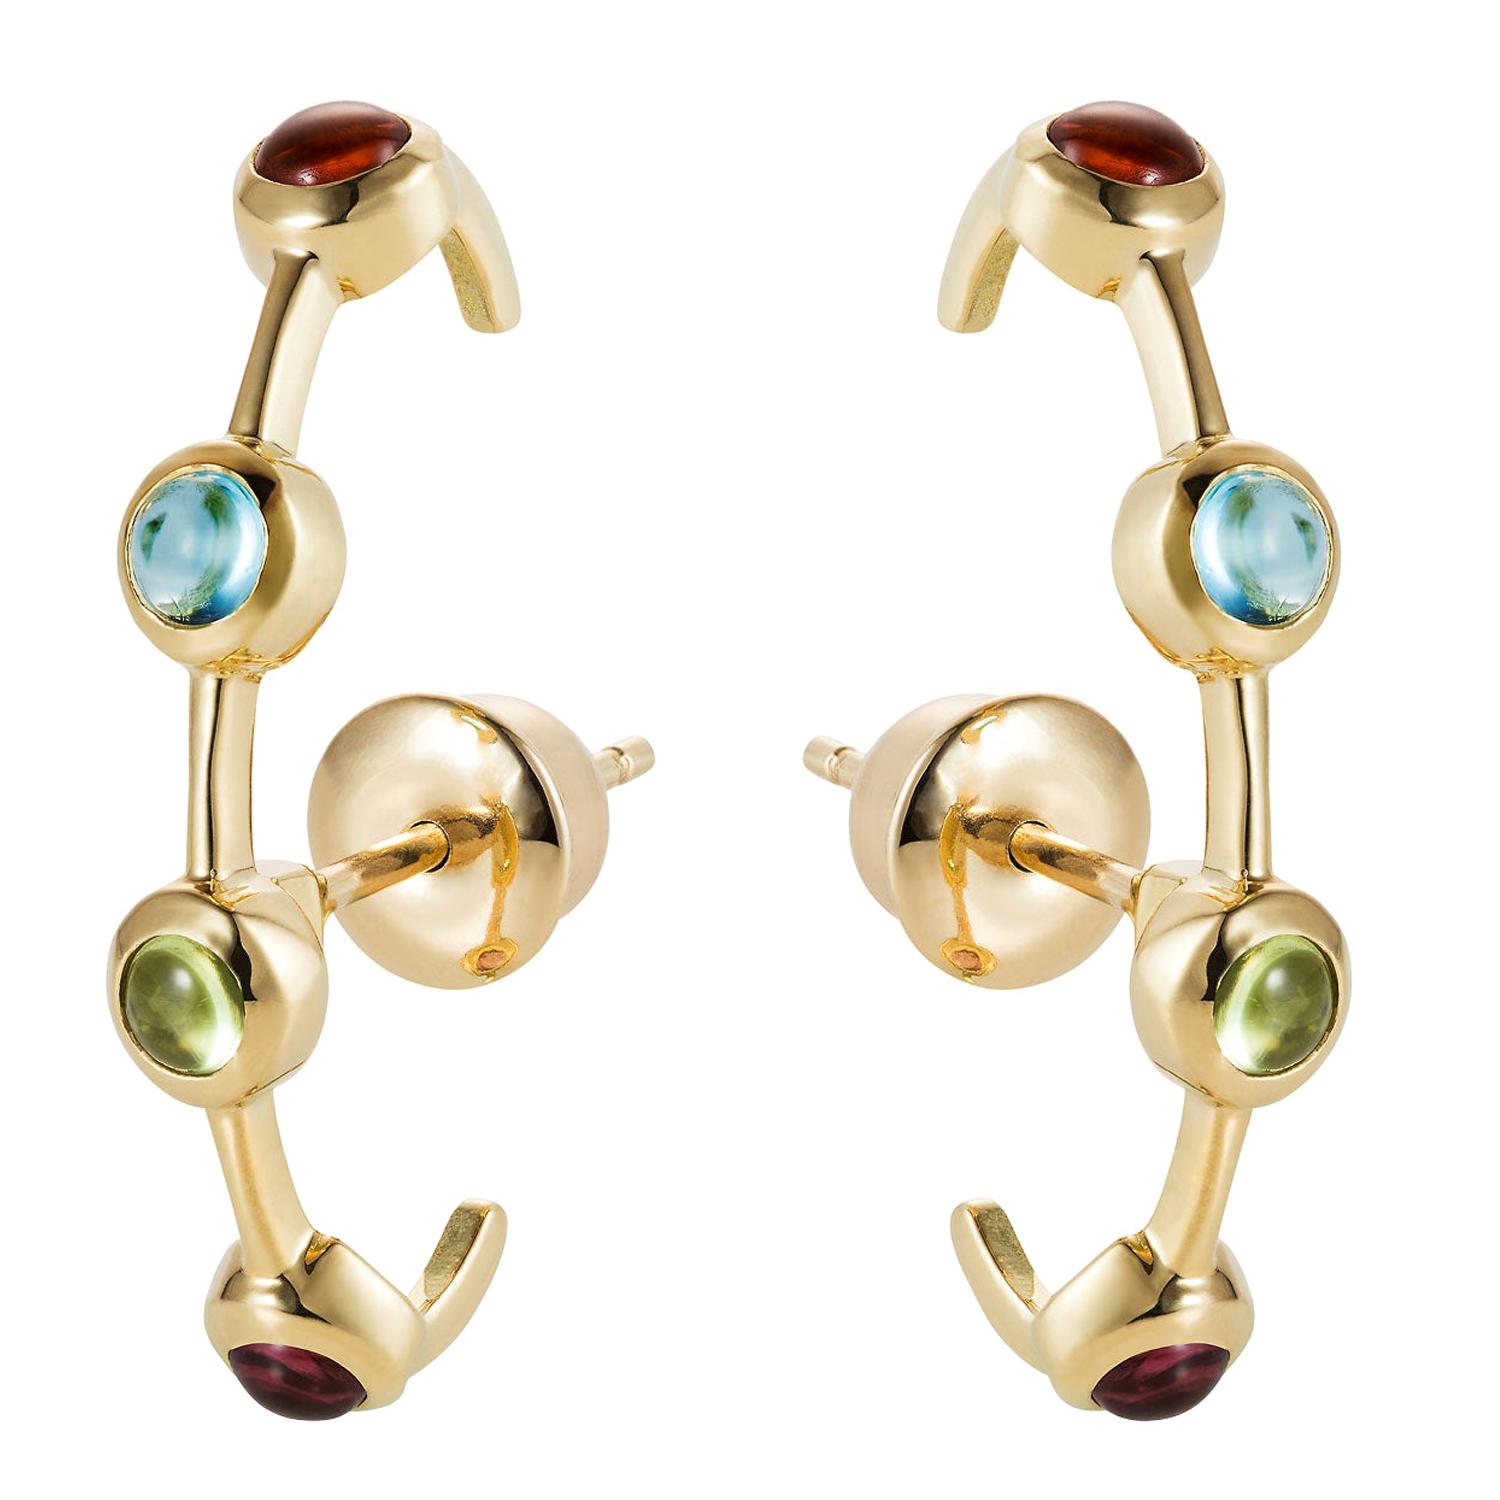 Modern Minimalism Ear-Cuff Earrings in Rainbow Color Gemstones, 18K Yellow Gold